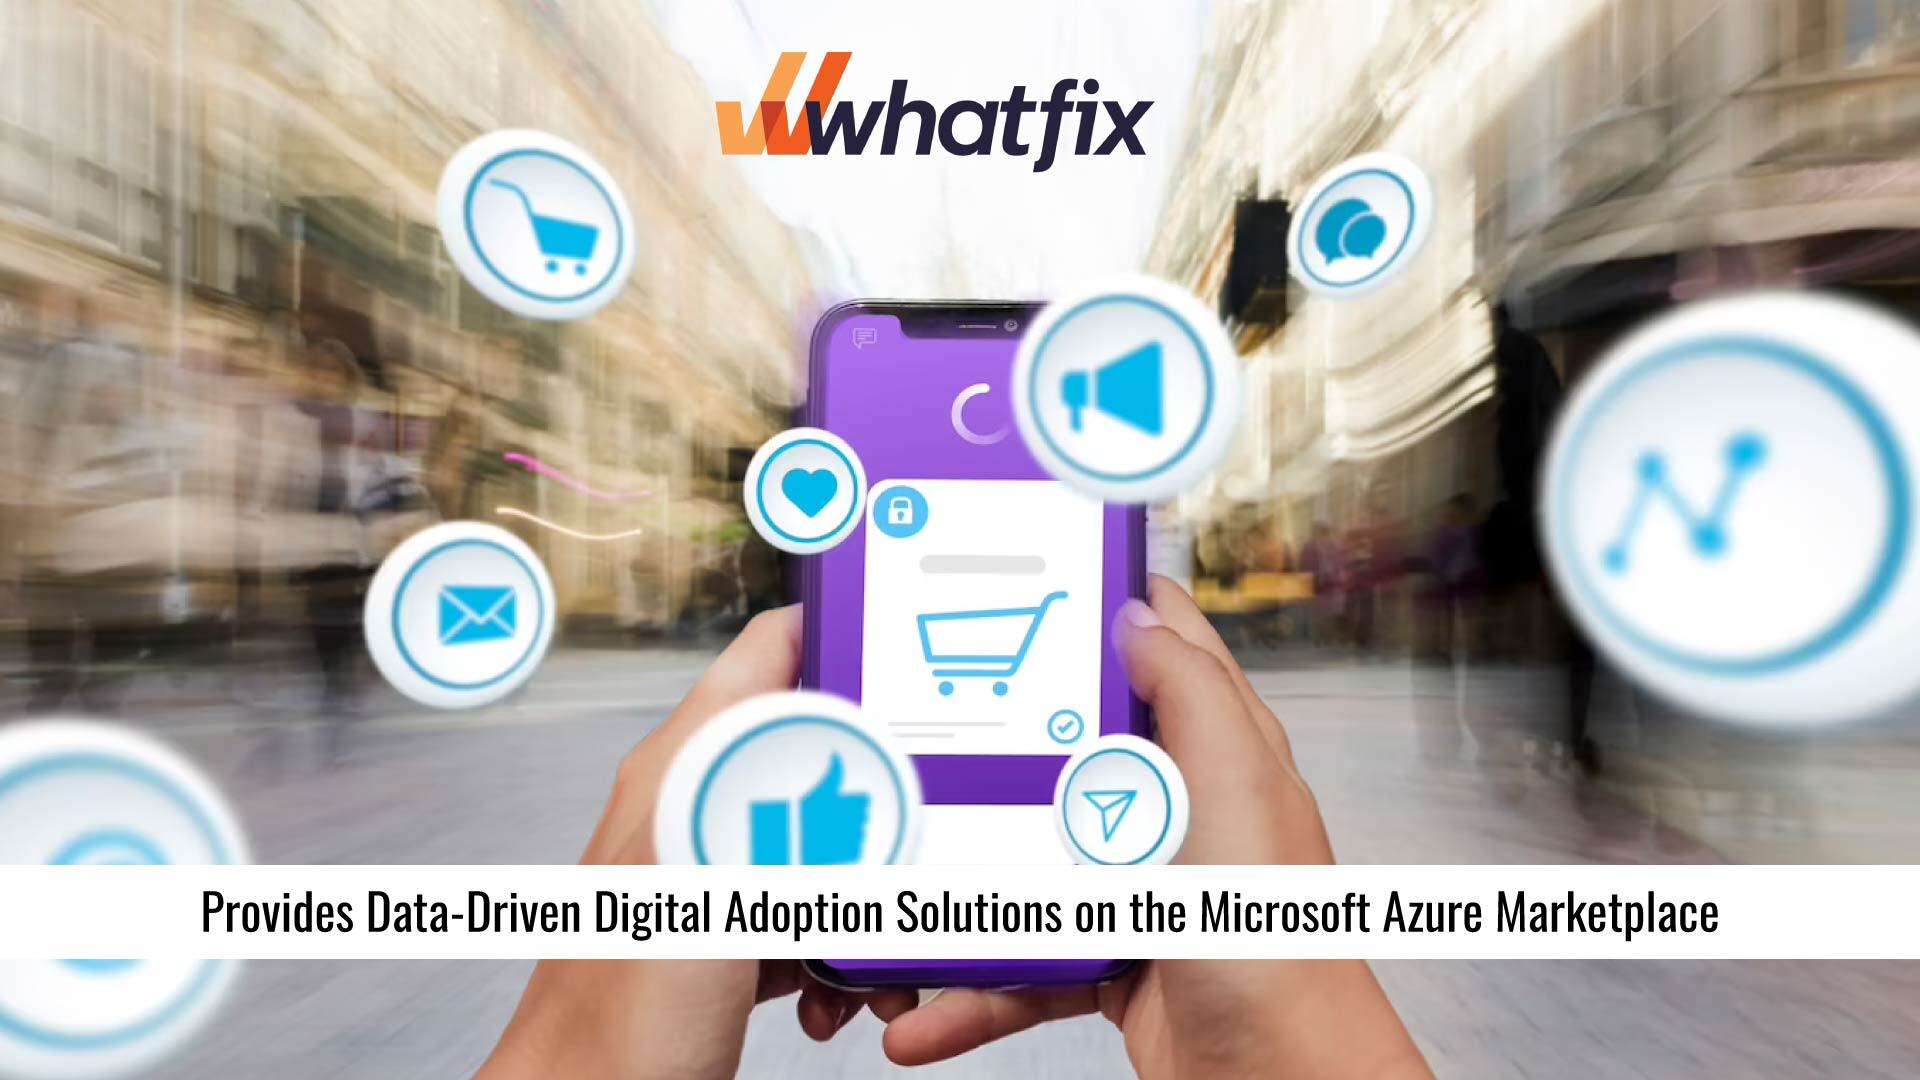 Whatfix provides data-driven Digital Adoption Solutions on the Microsoft Azure Marketplace